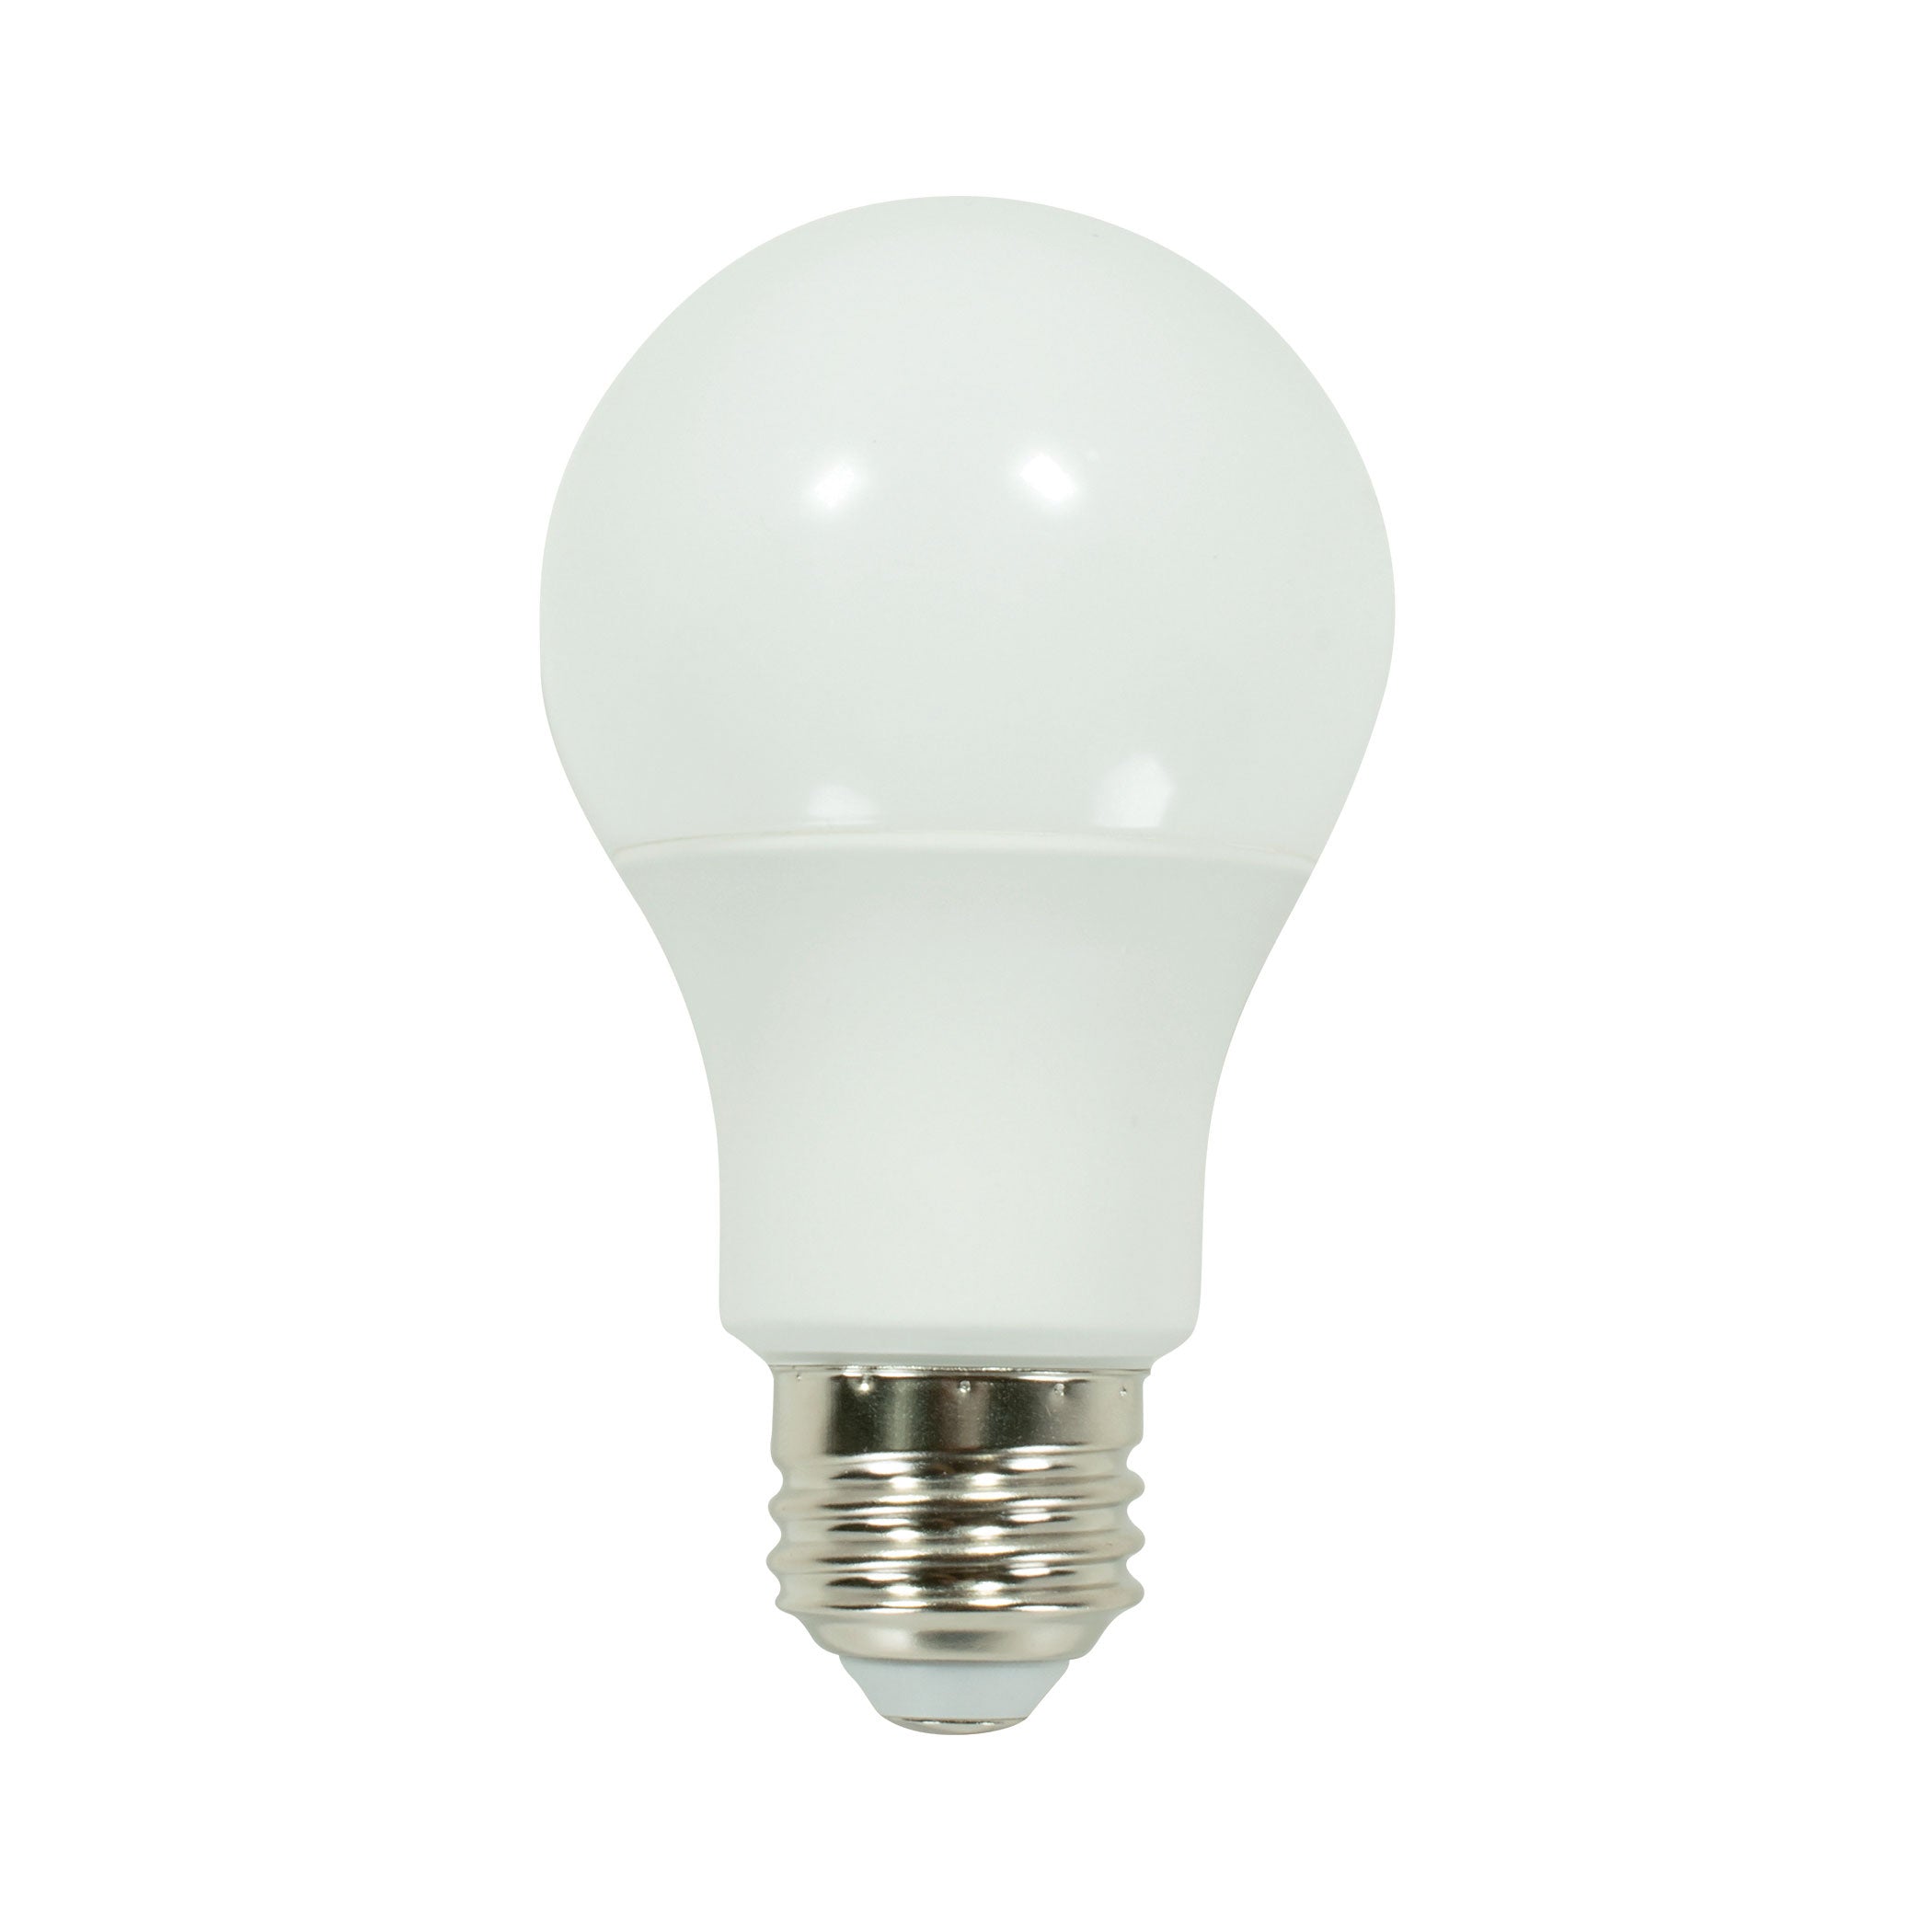 800 Lumen LED A19 Bulb, 9-Watt, 60-Watt Equivalent E26 - 120 Pack Master Case